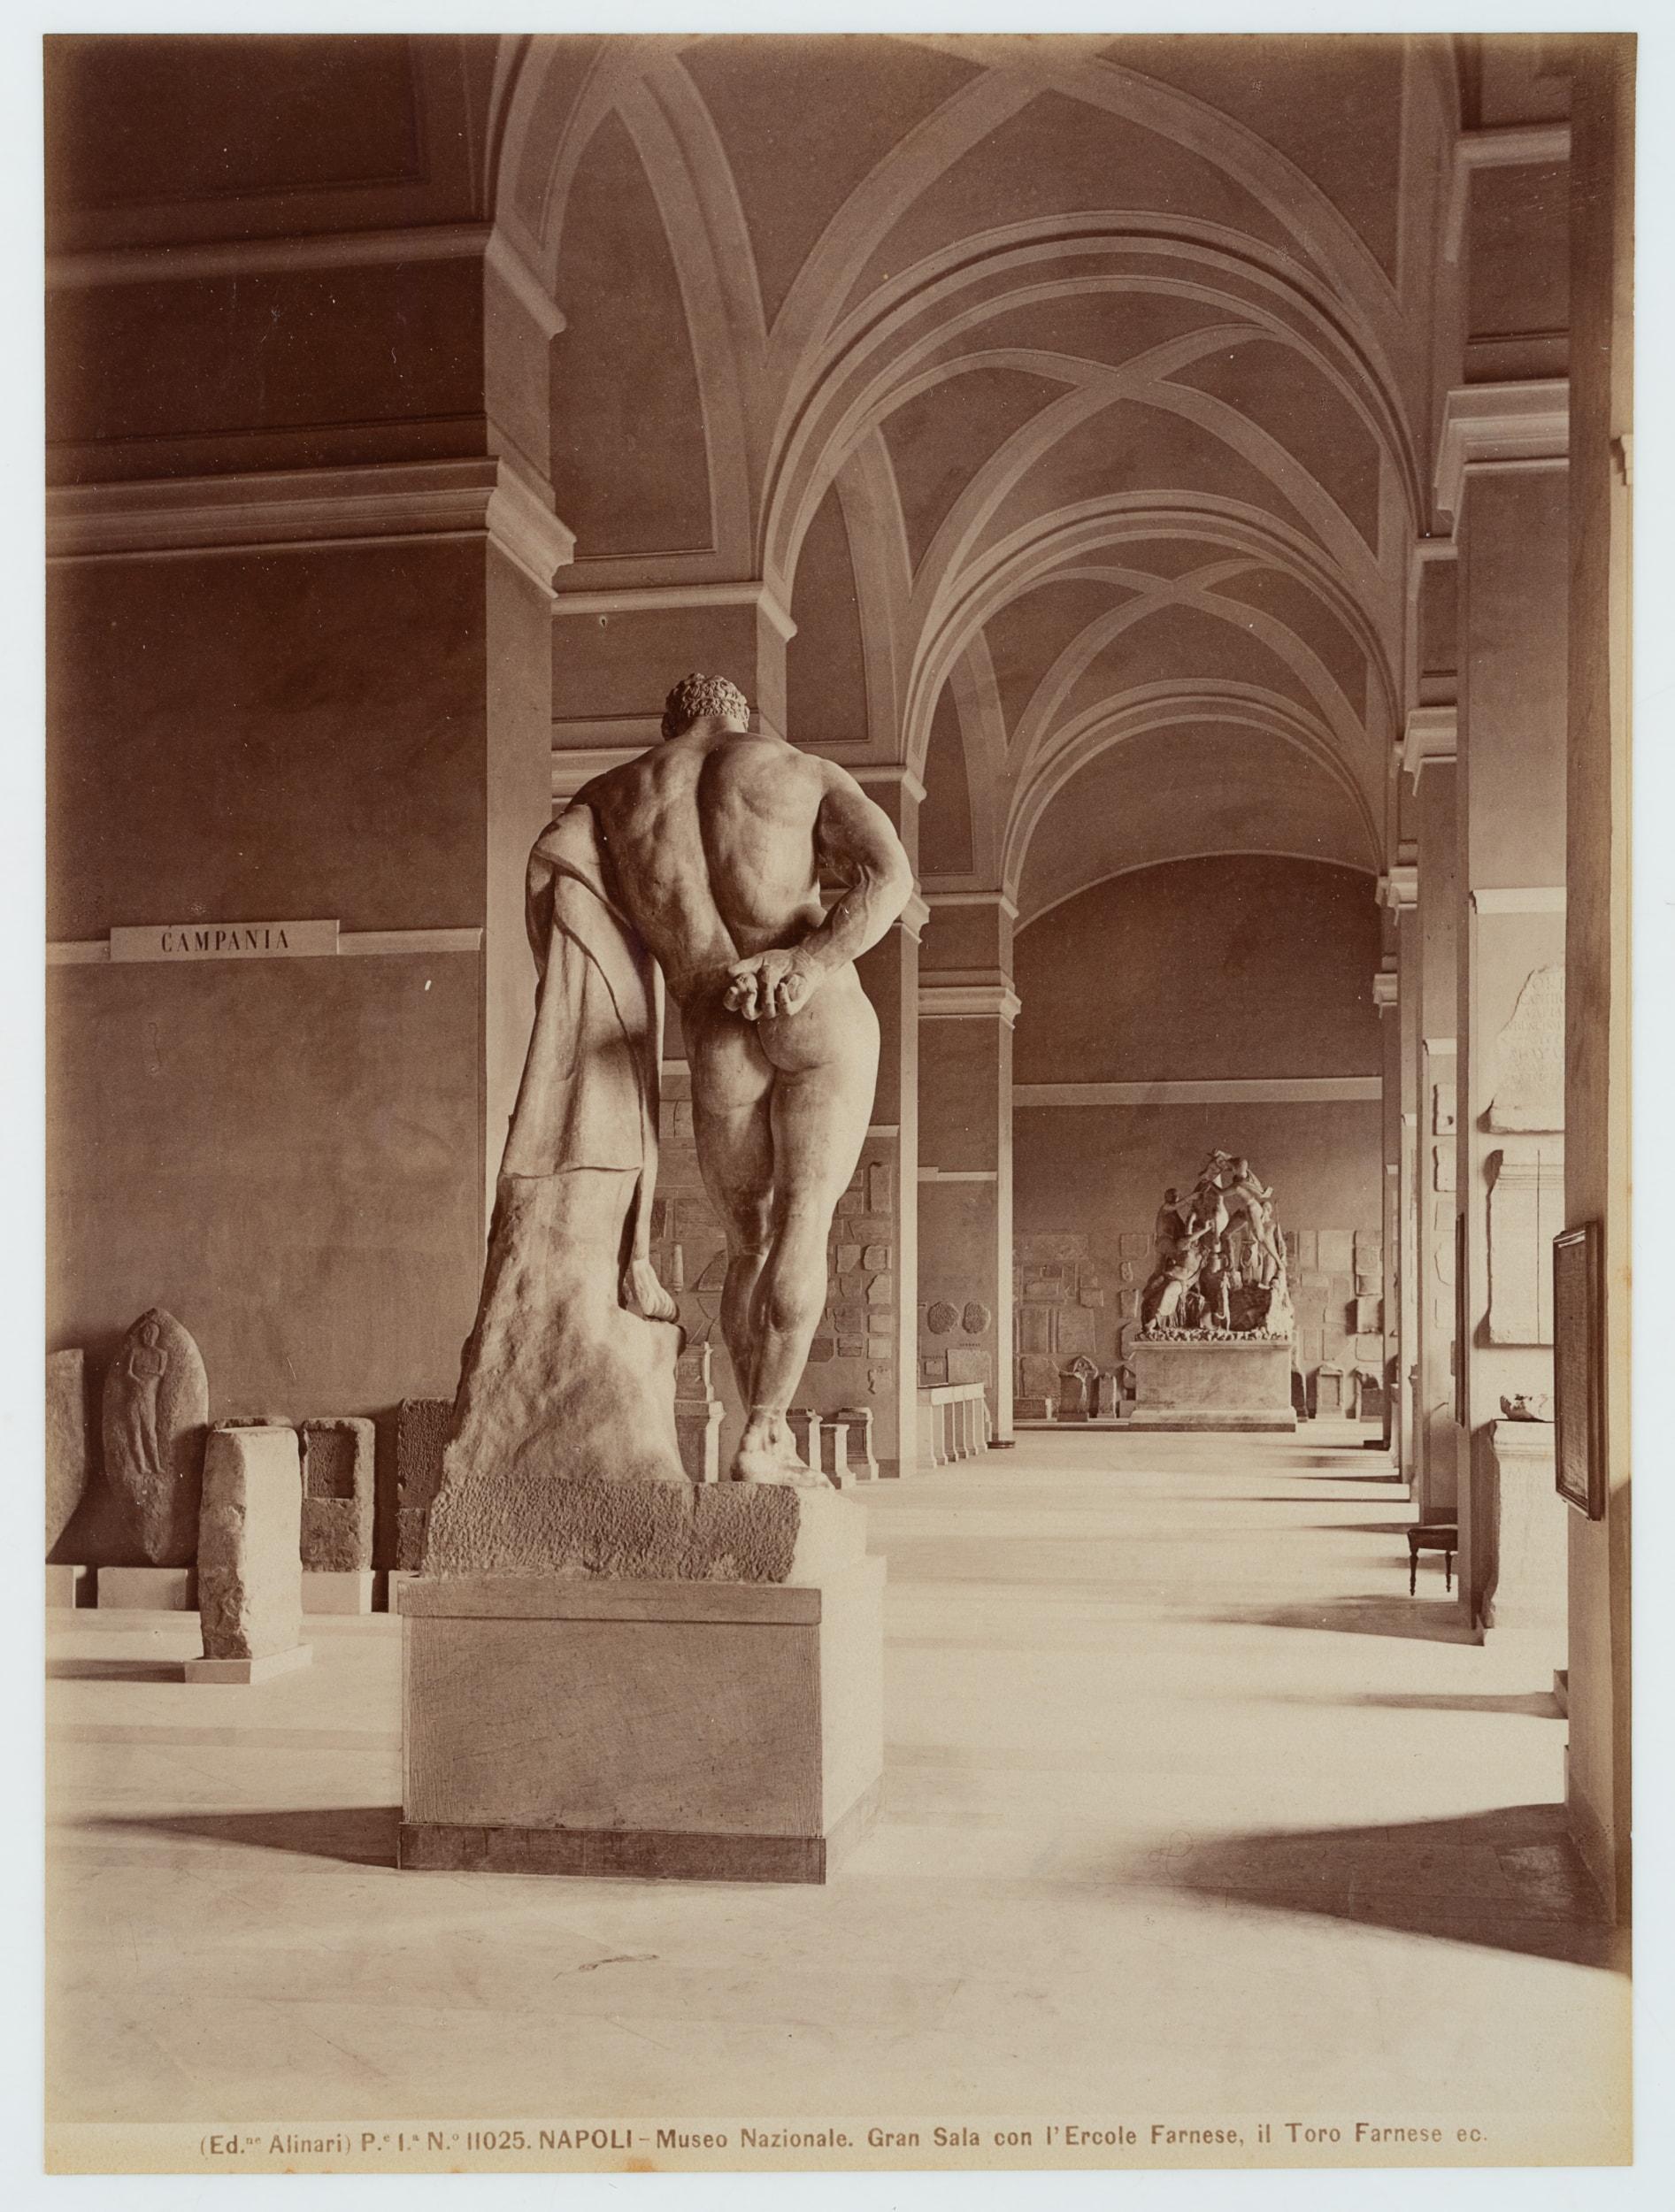 Herkules Farnese, National Museum, Neapel - Photograph by Fratelli Alinari